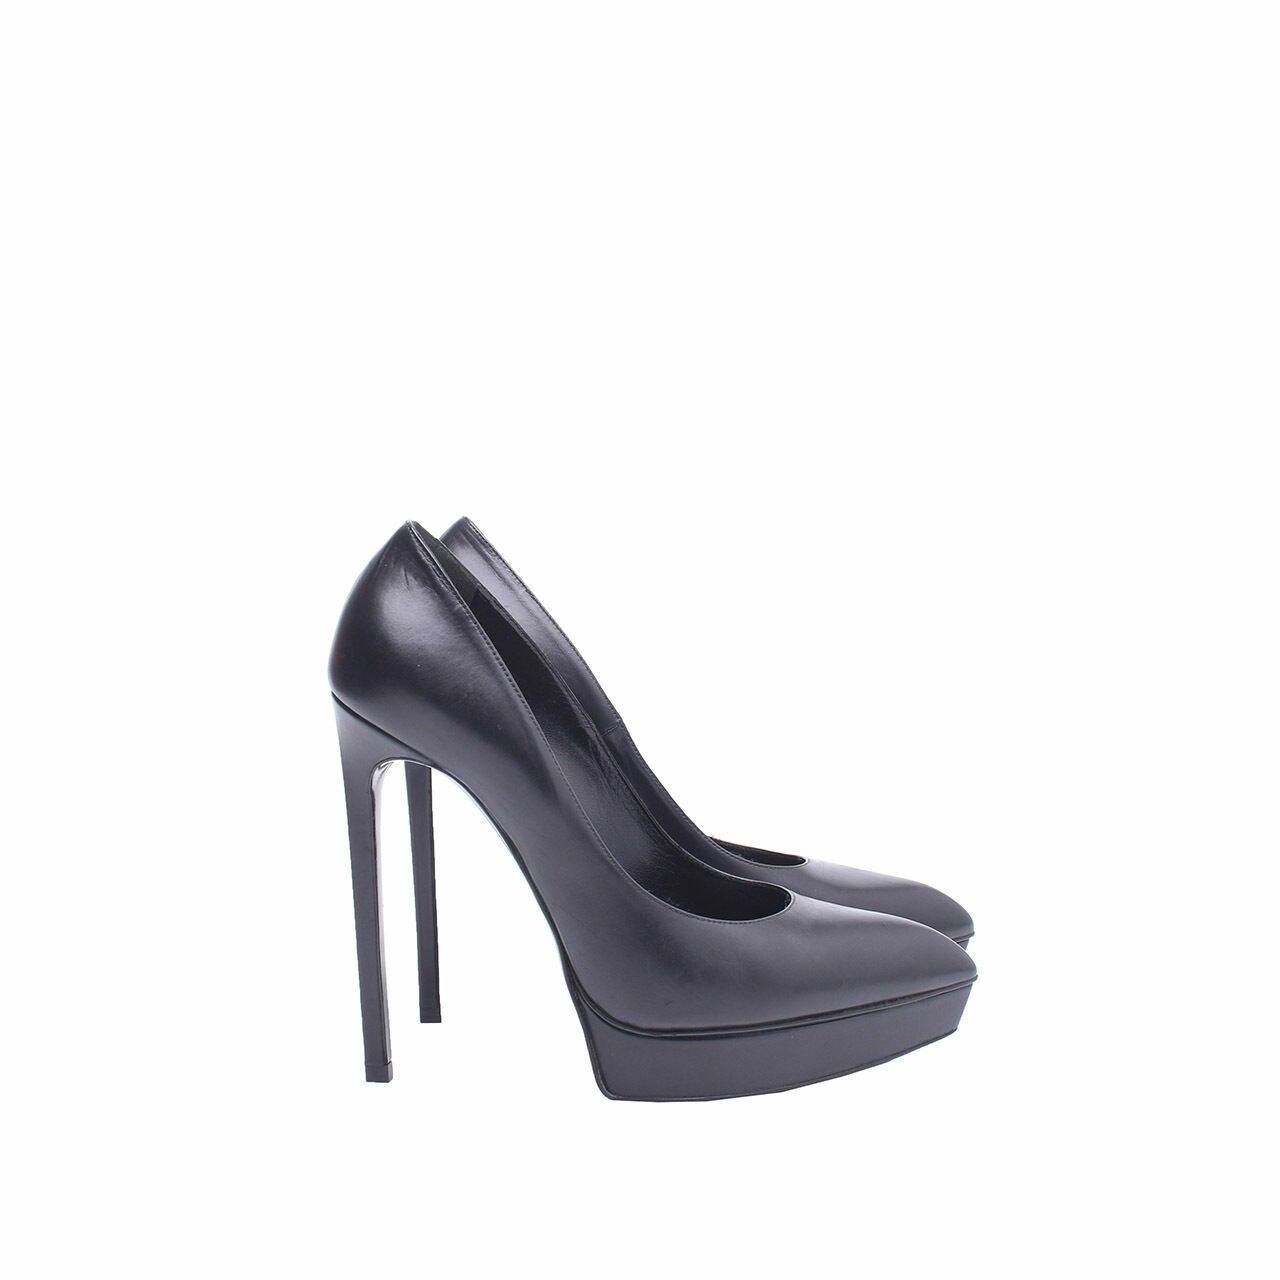 Saint Laurent Paris Black Pump Heels